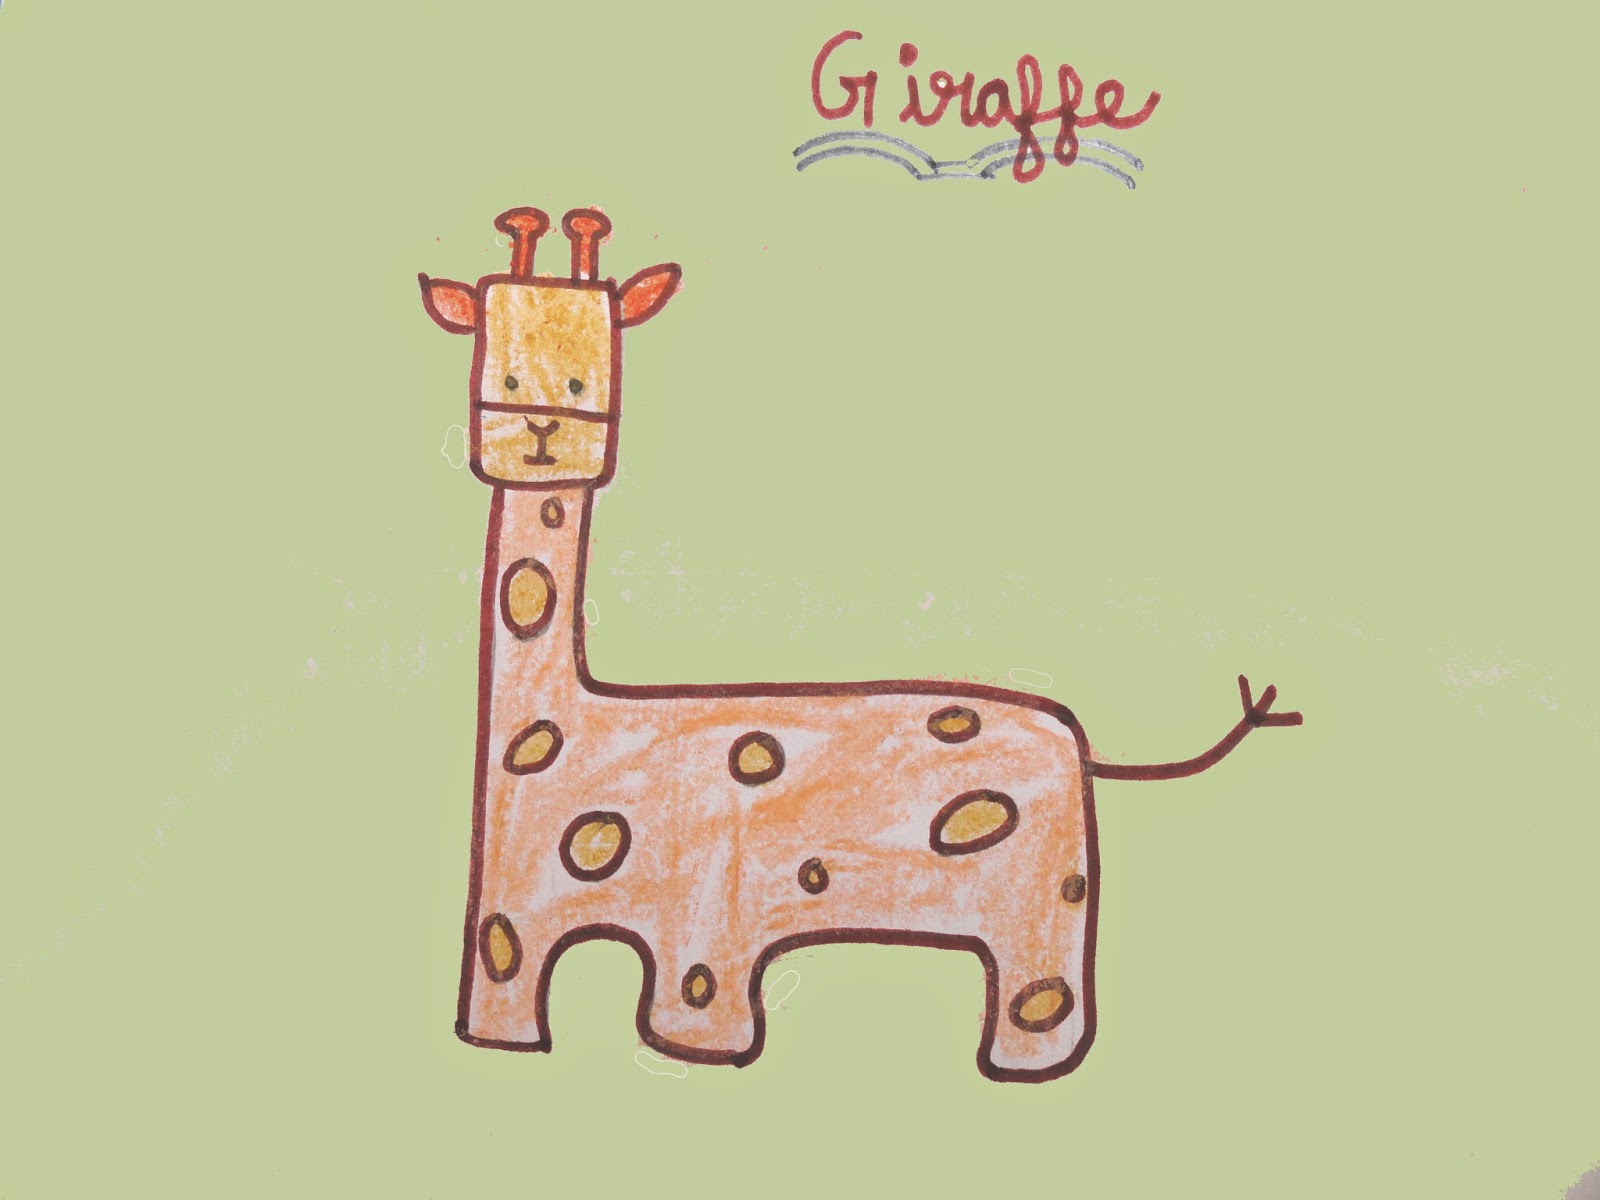 17 Amazing facts about Giraffe